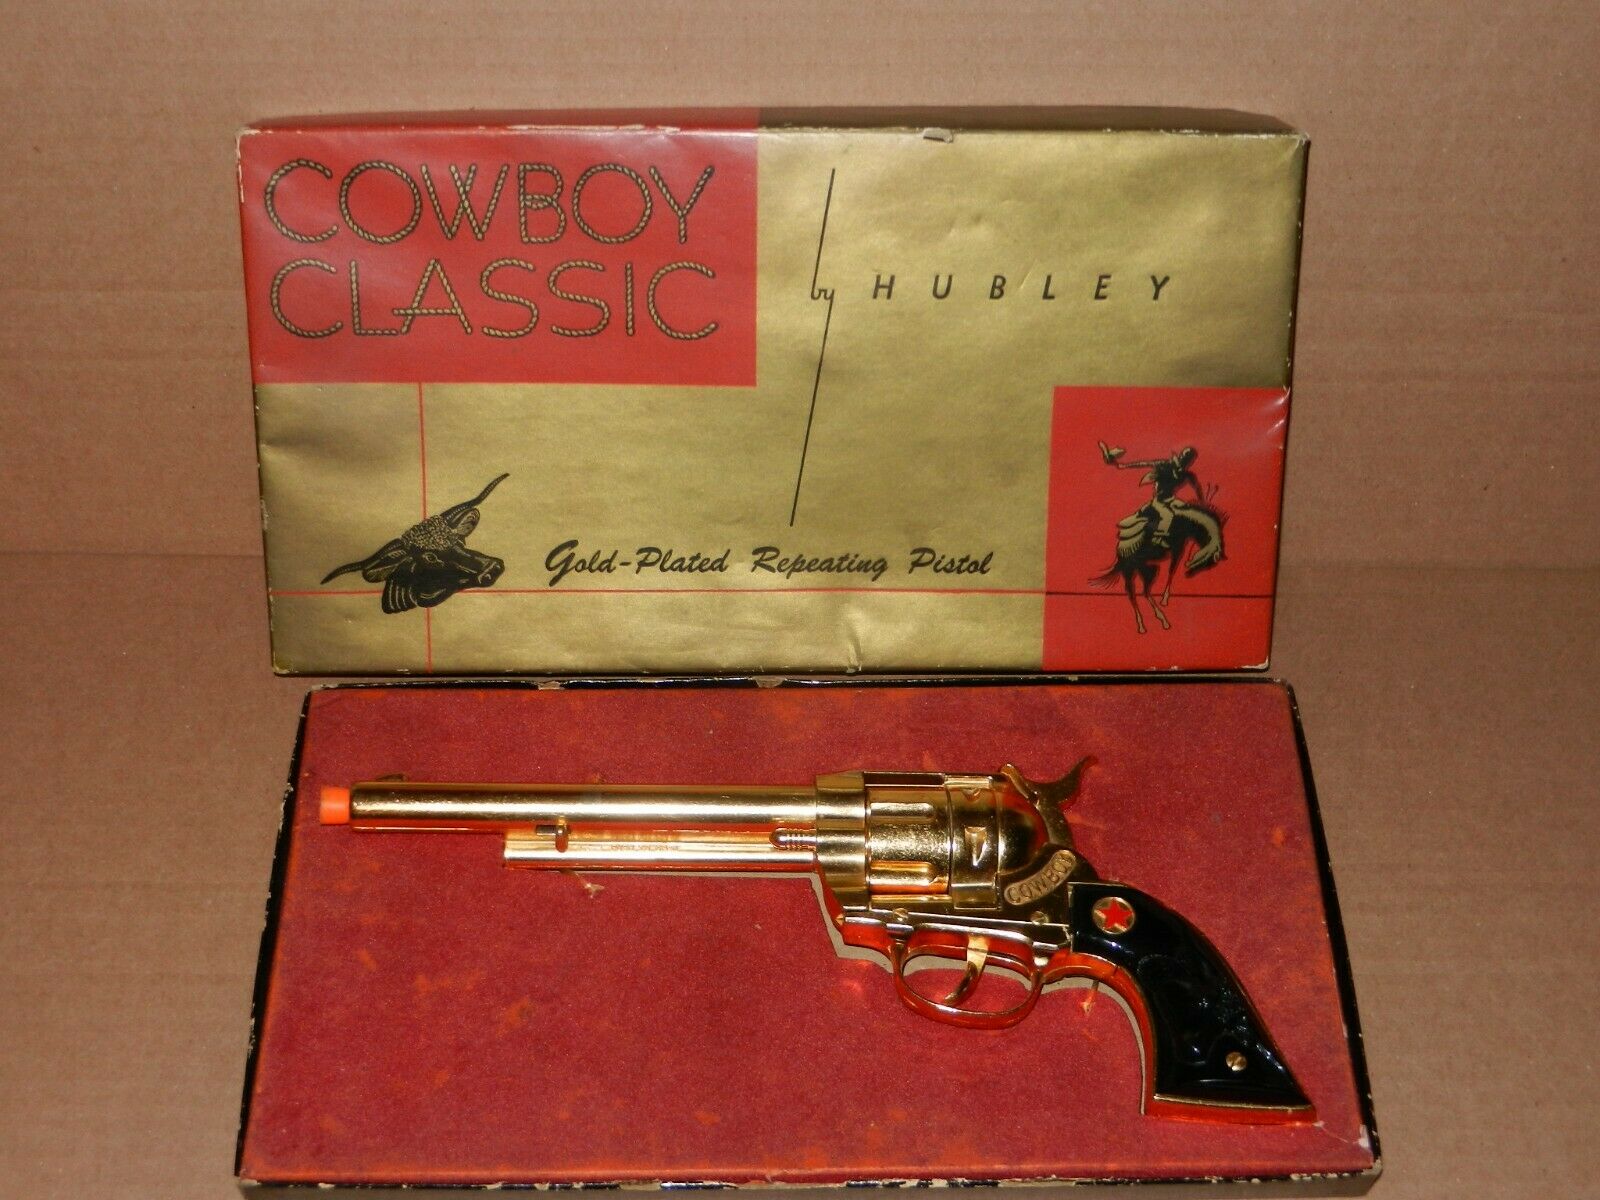 New Hubley Cowboy Classic 1955 No 276 Gold Plated Repeating Cap Gun  Nice!!